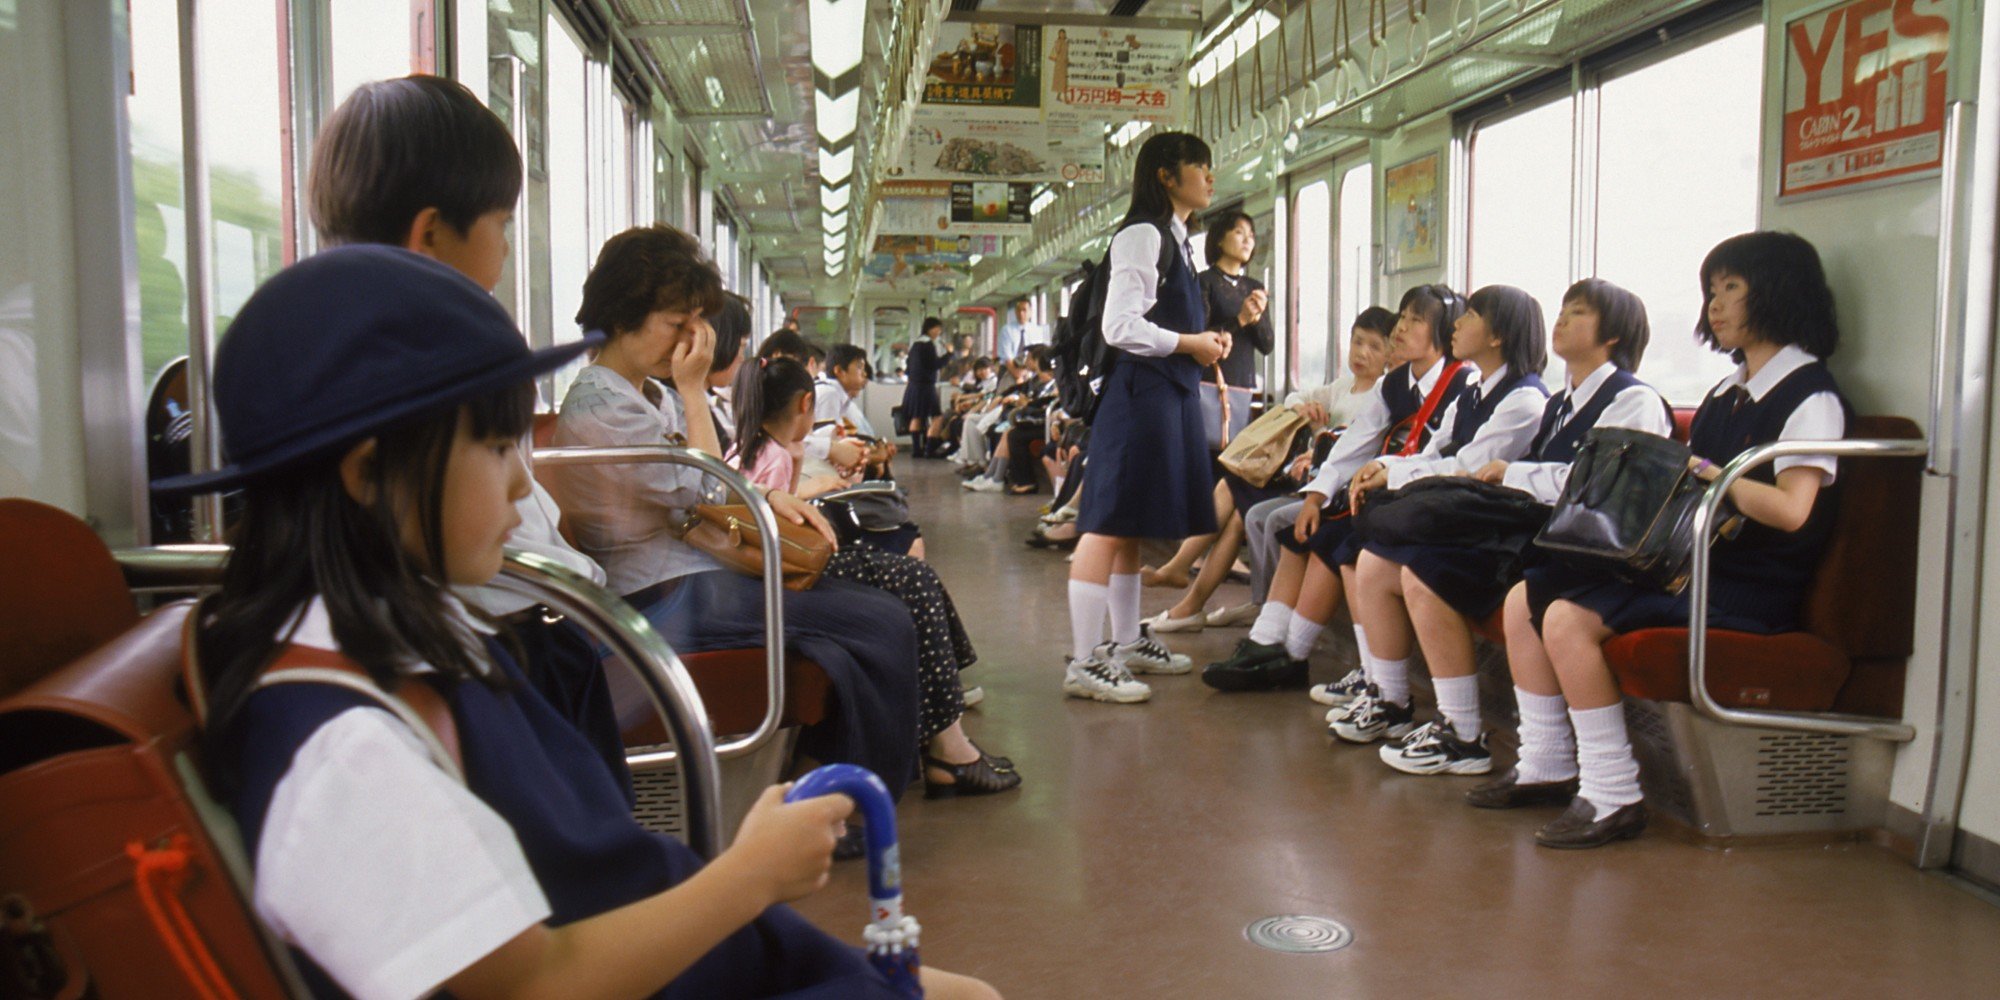 Лапаю япония. Вагон метро Токио. Японцы в транспорте. Японские девушки в транспорте. Японцы в общественном транспорте.